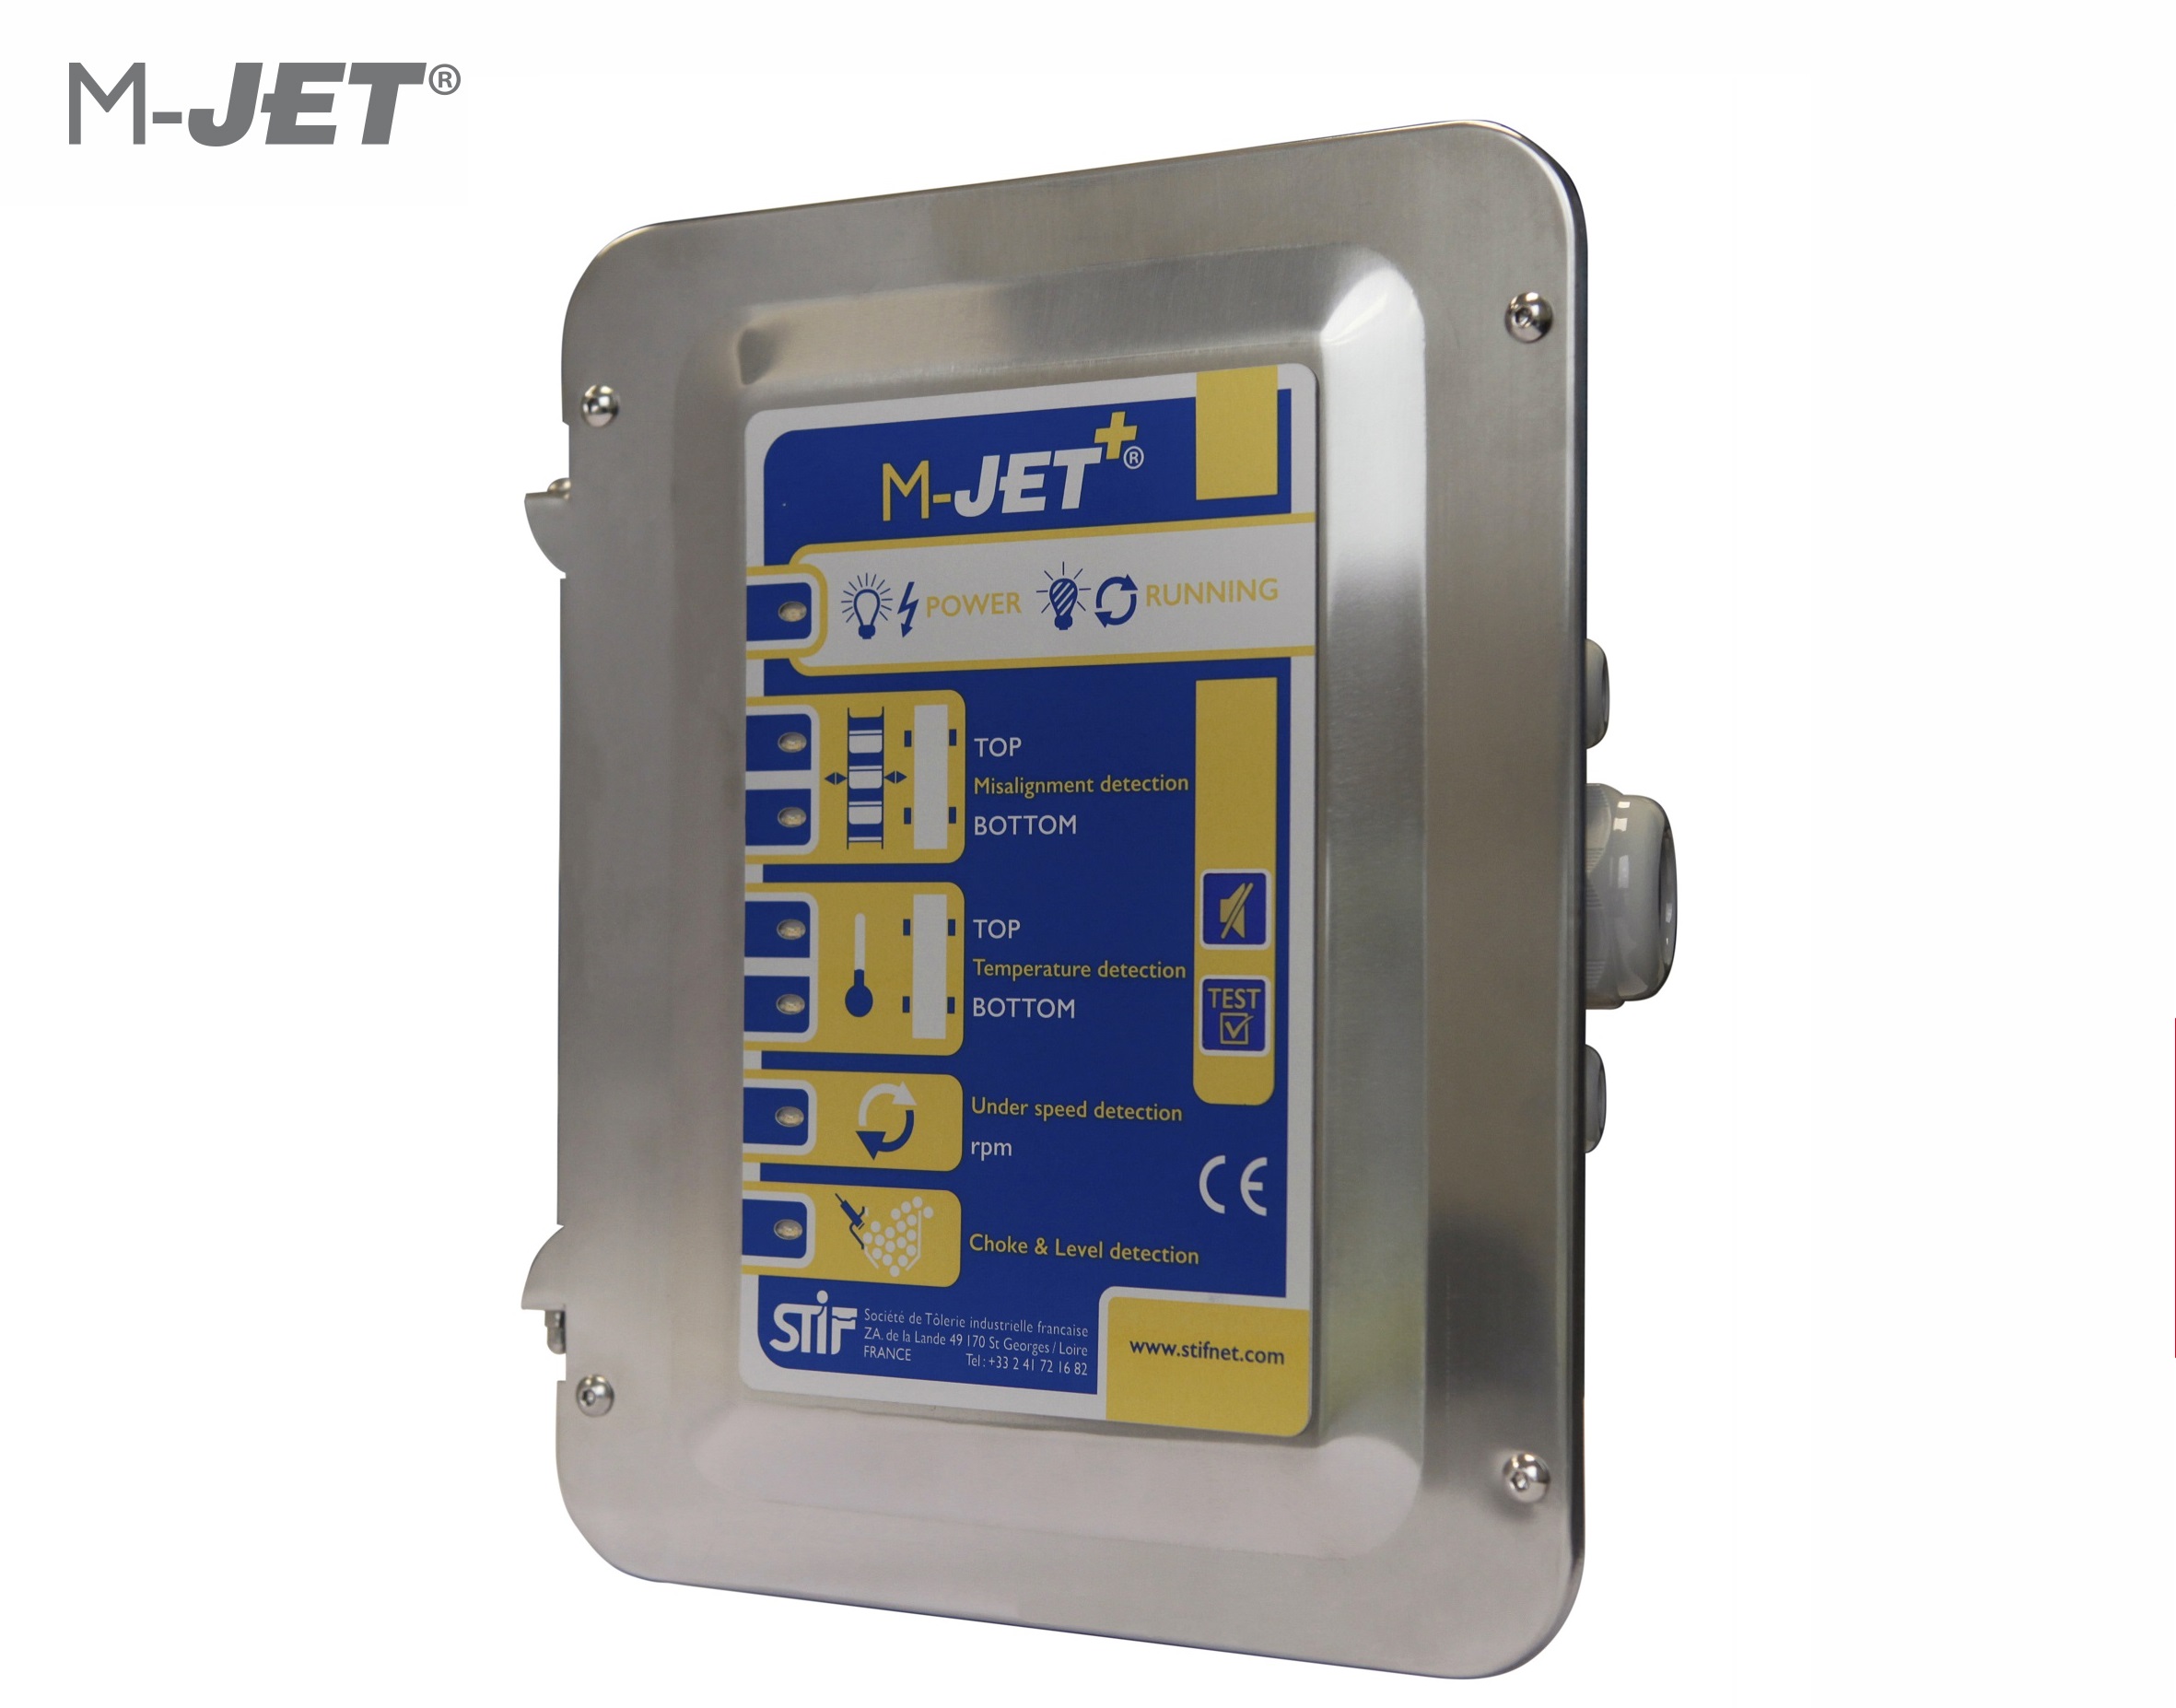 10_M-JET- Hazard Monitoring System